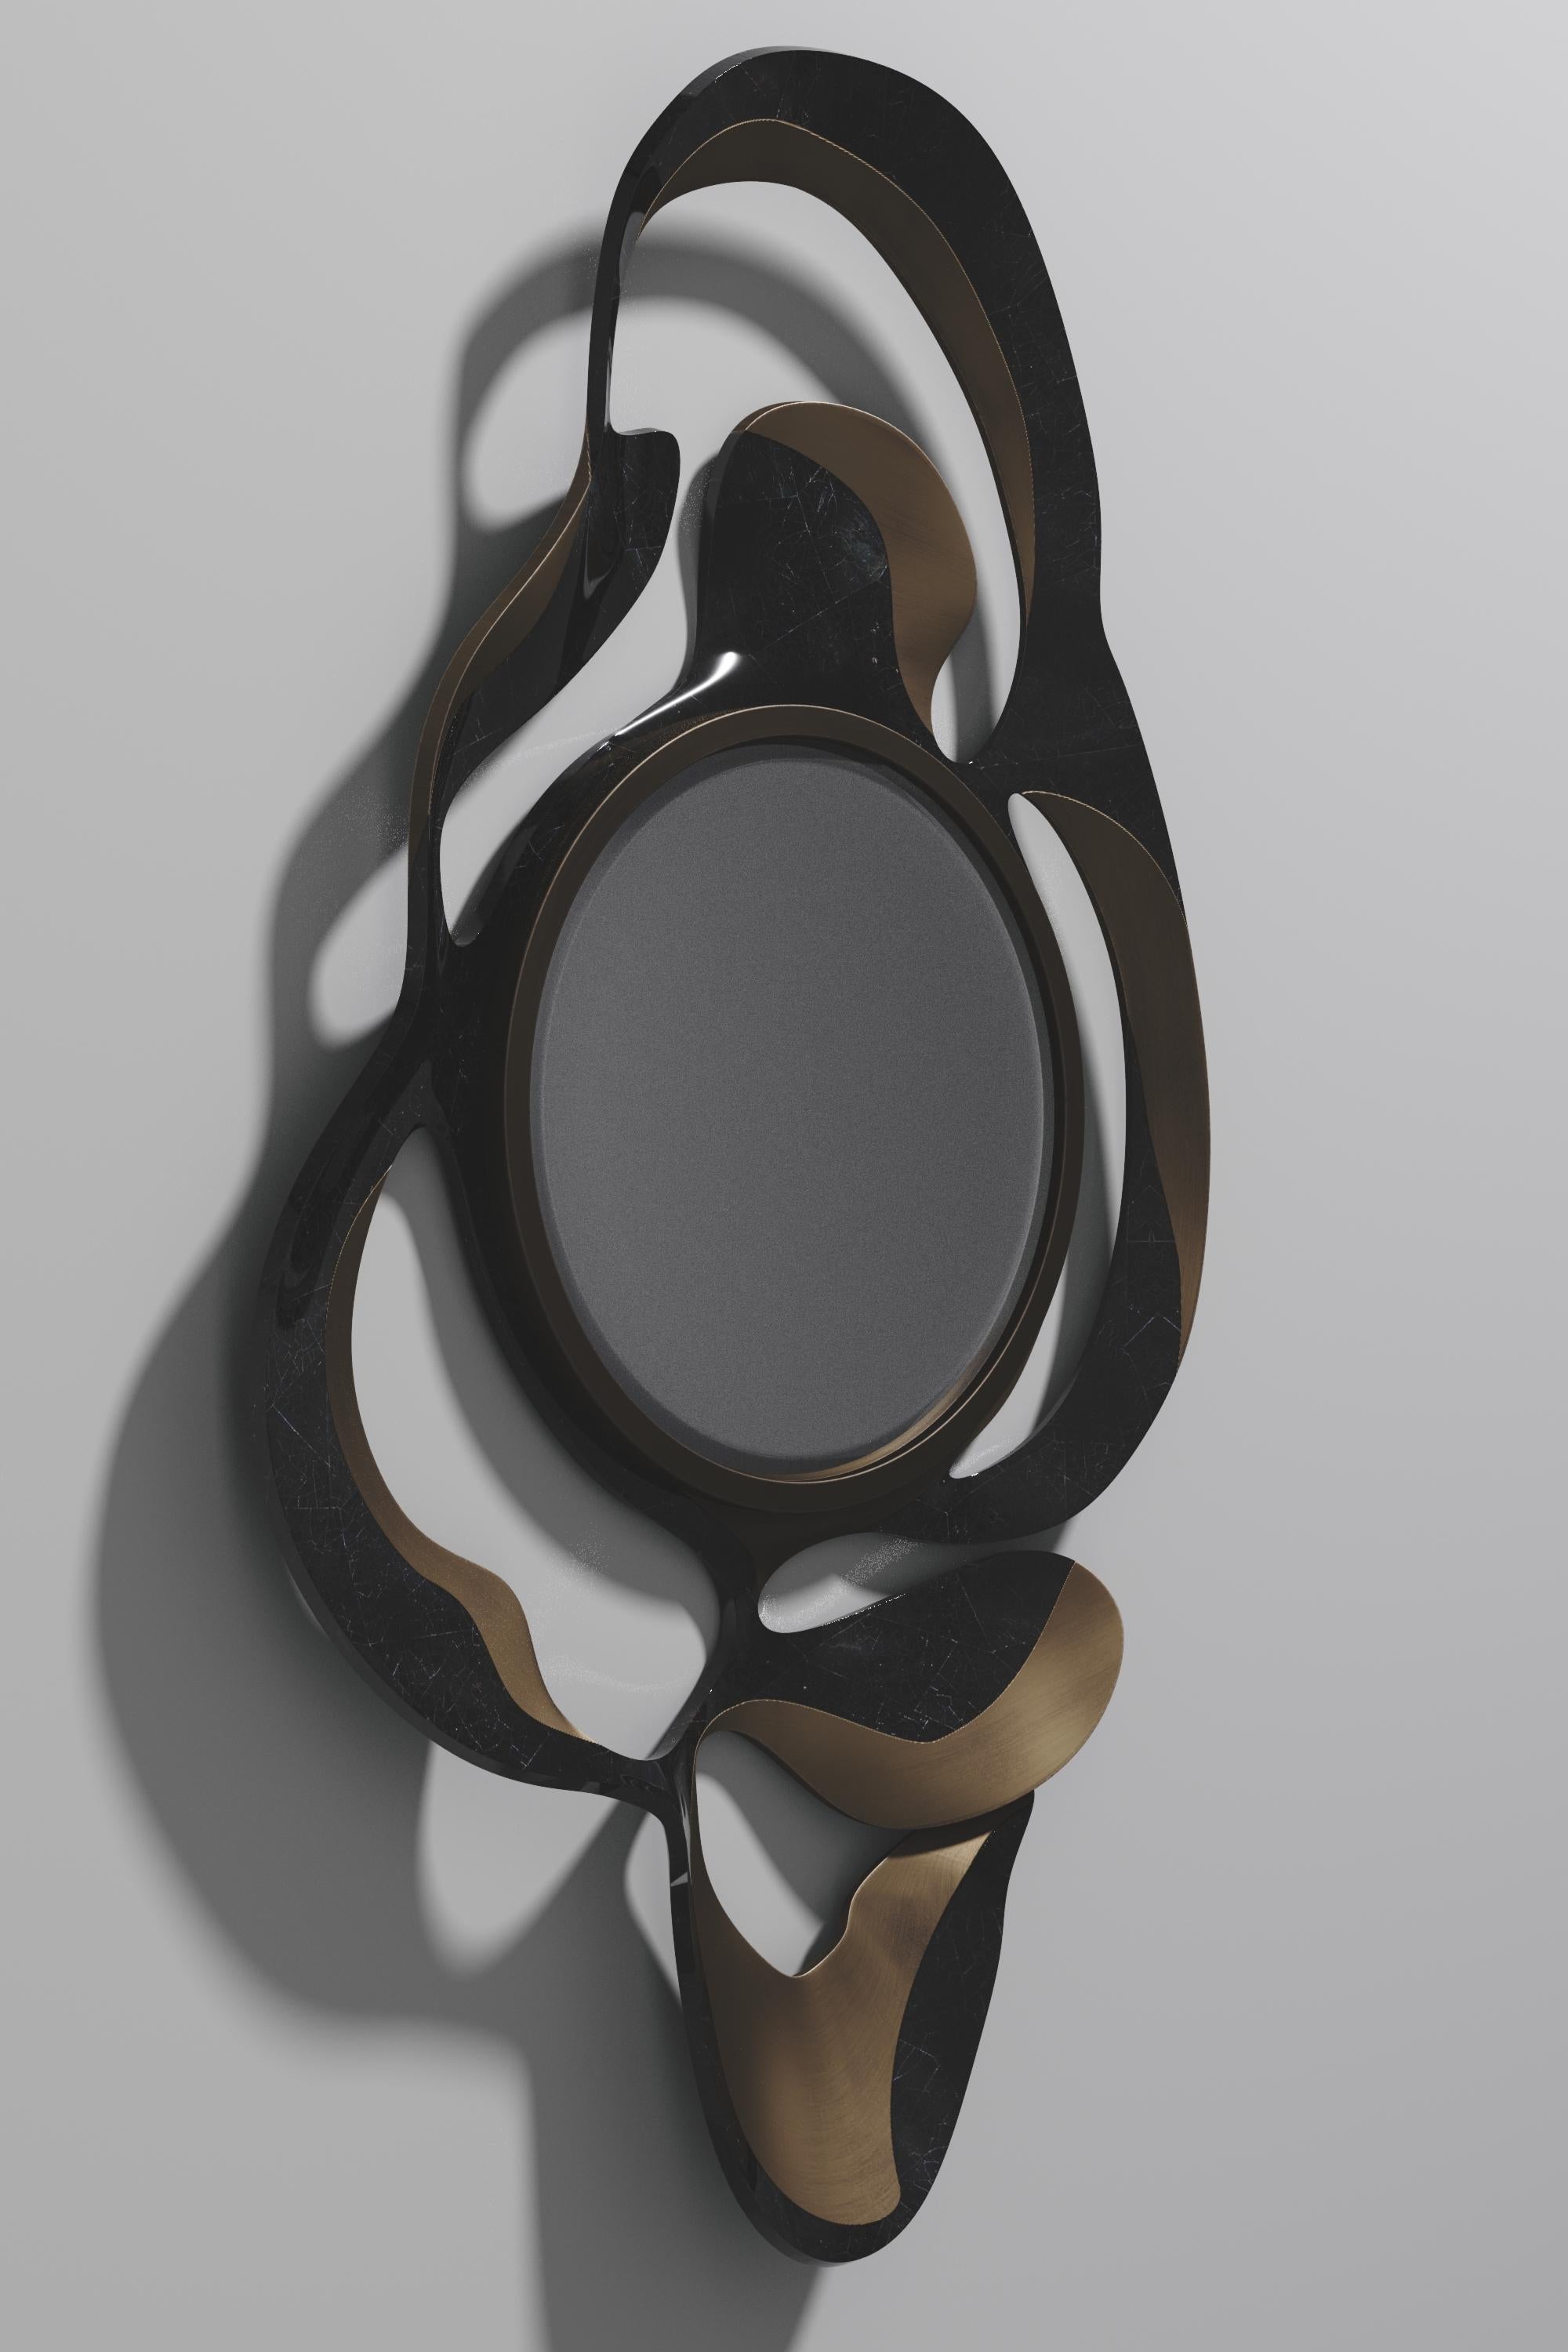 Inlay  Bronze Patina Brass Inlaid Mirror by Kifu Paris For Sale